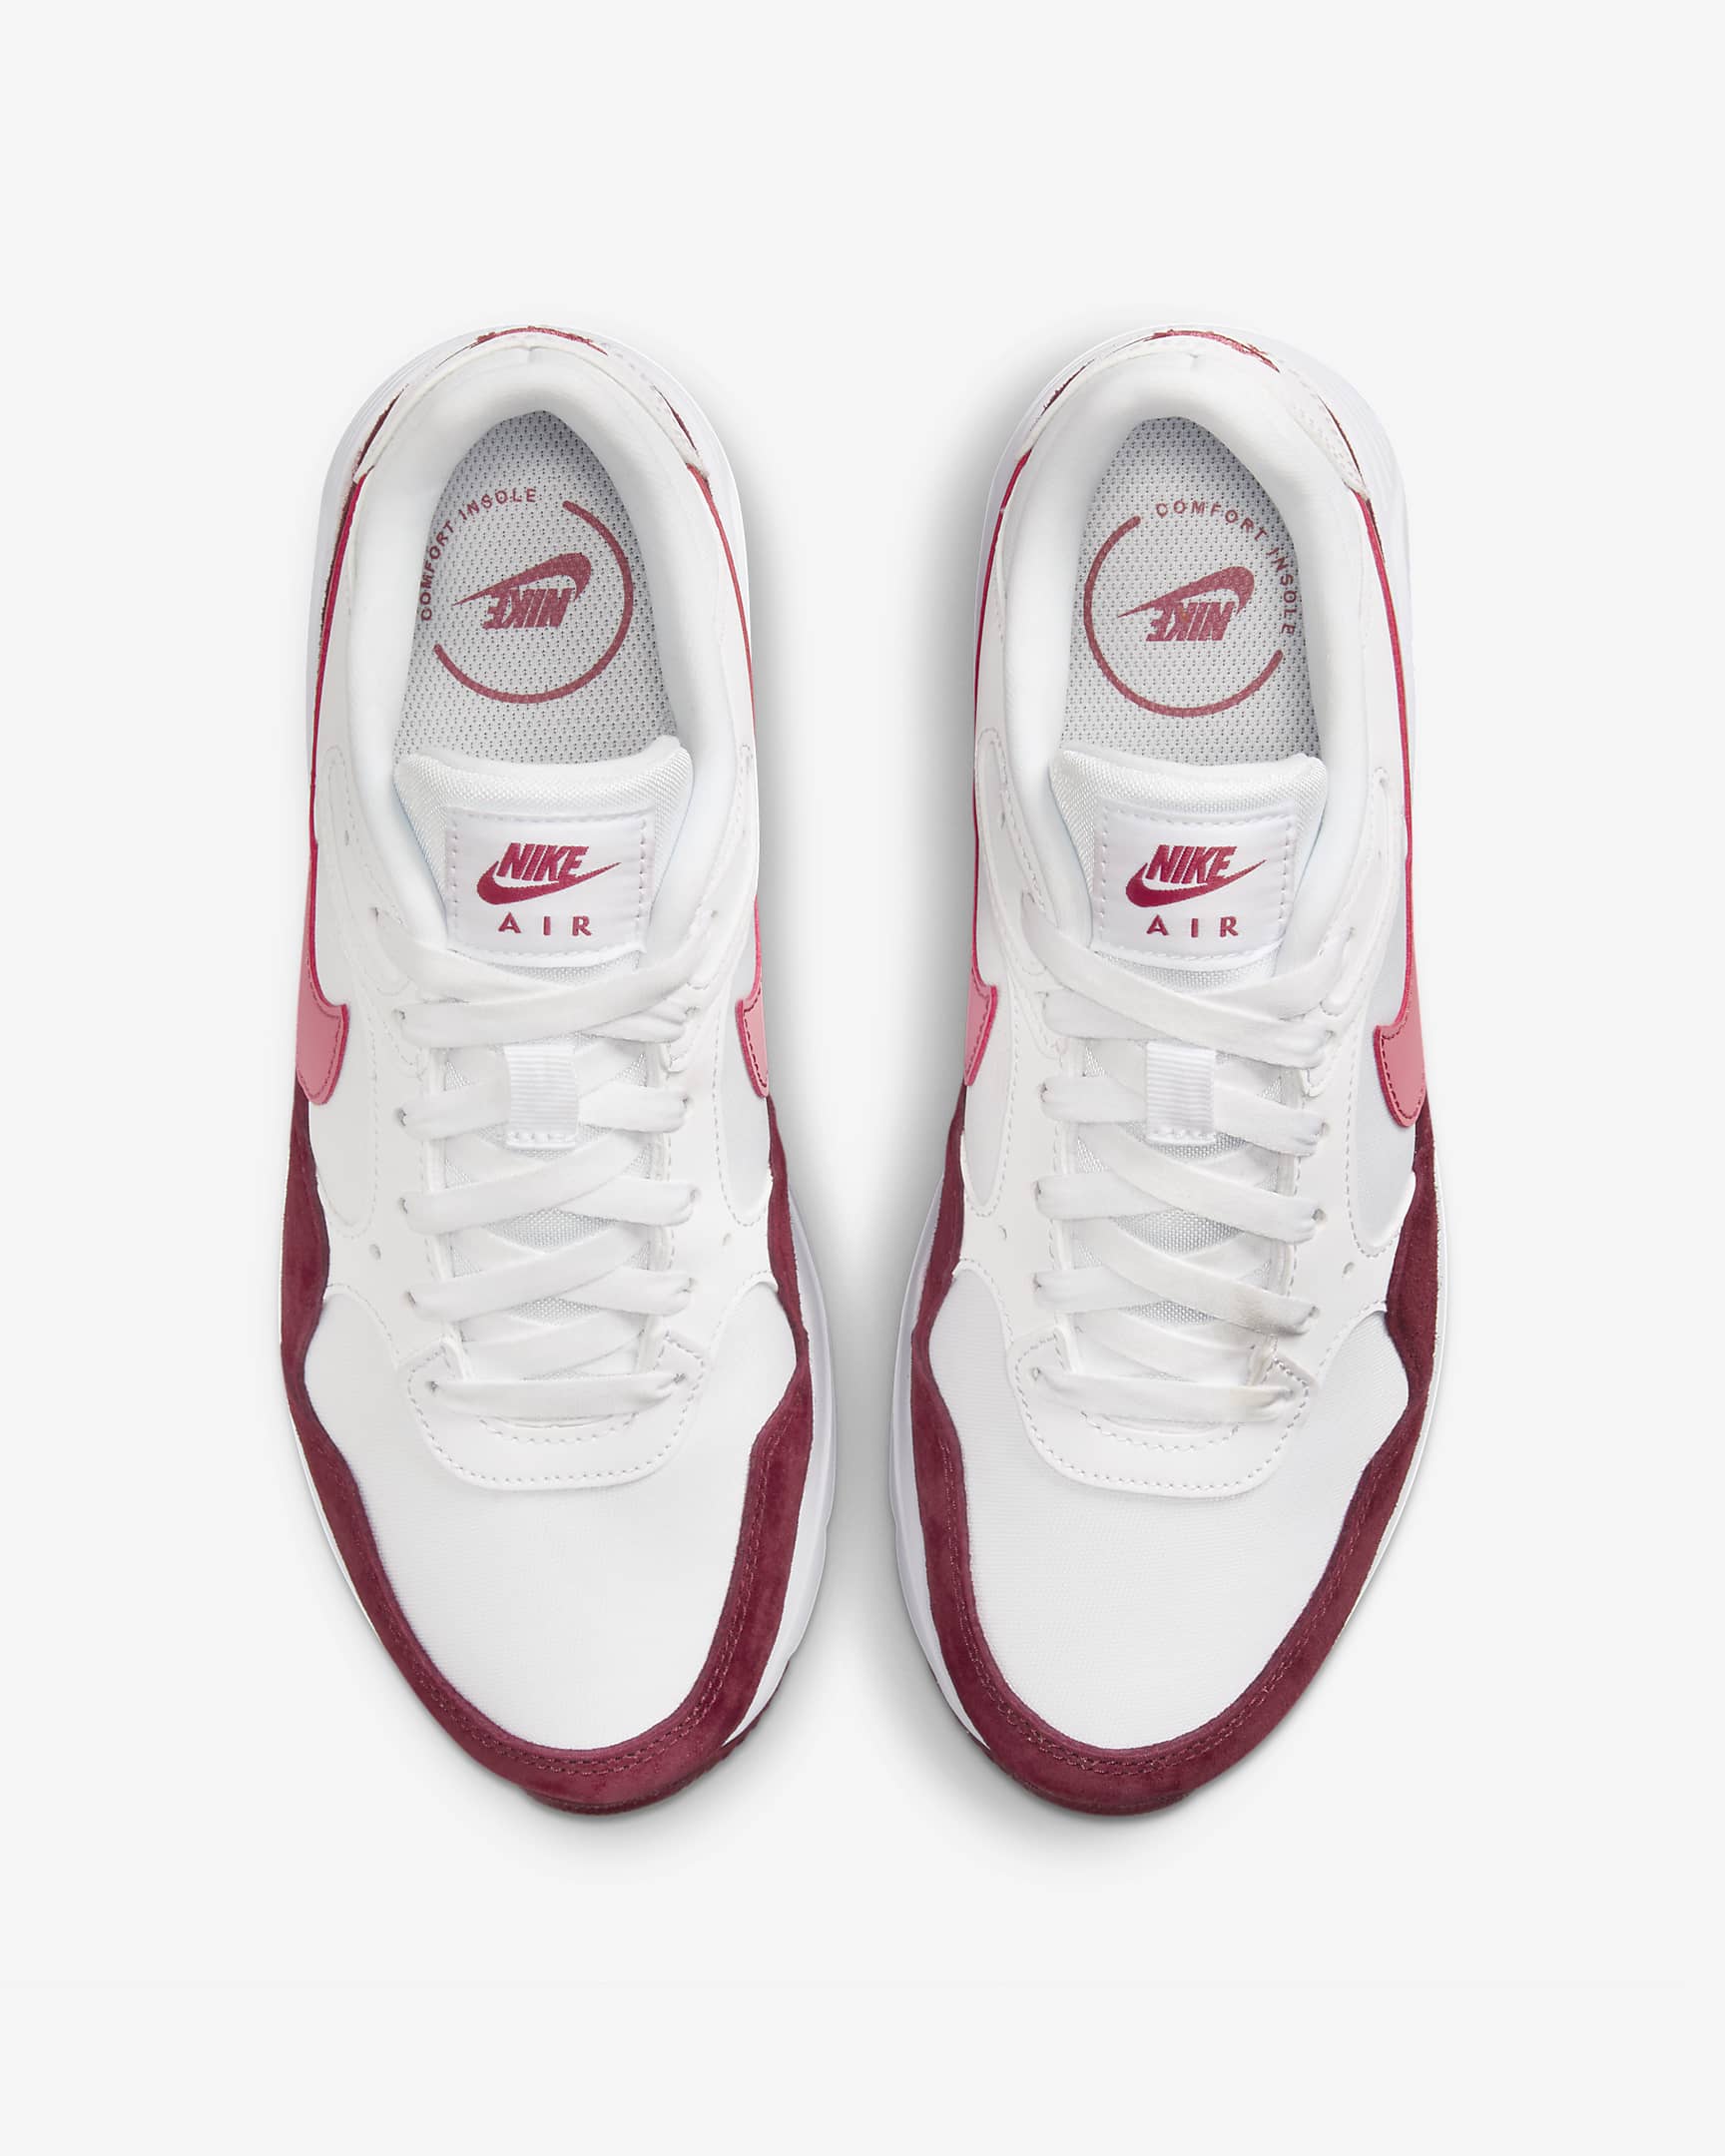 Nike Air Max SC Women's Shoes - White/Team Red/Adobe